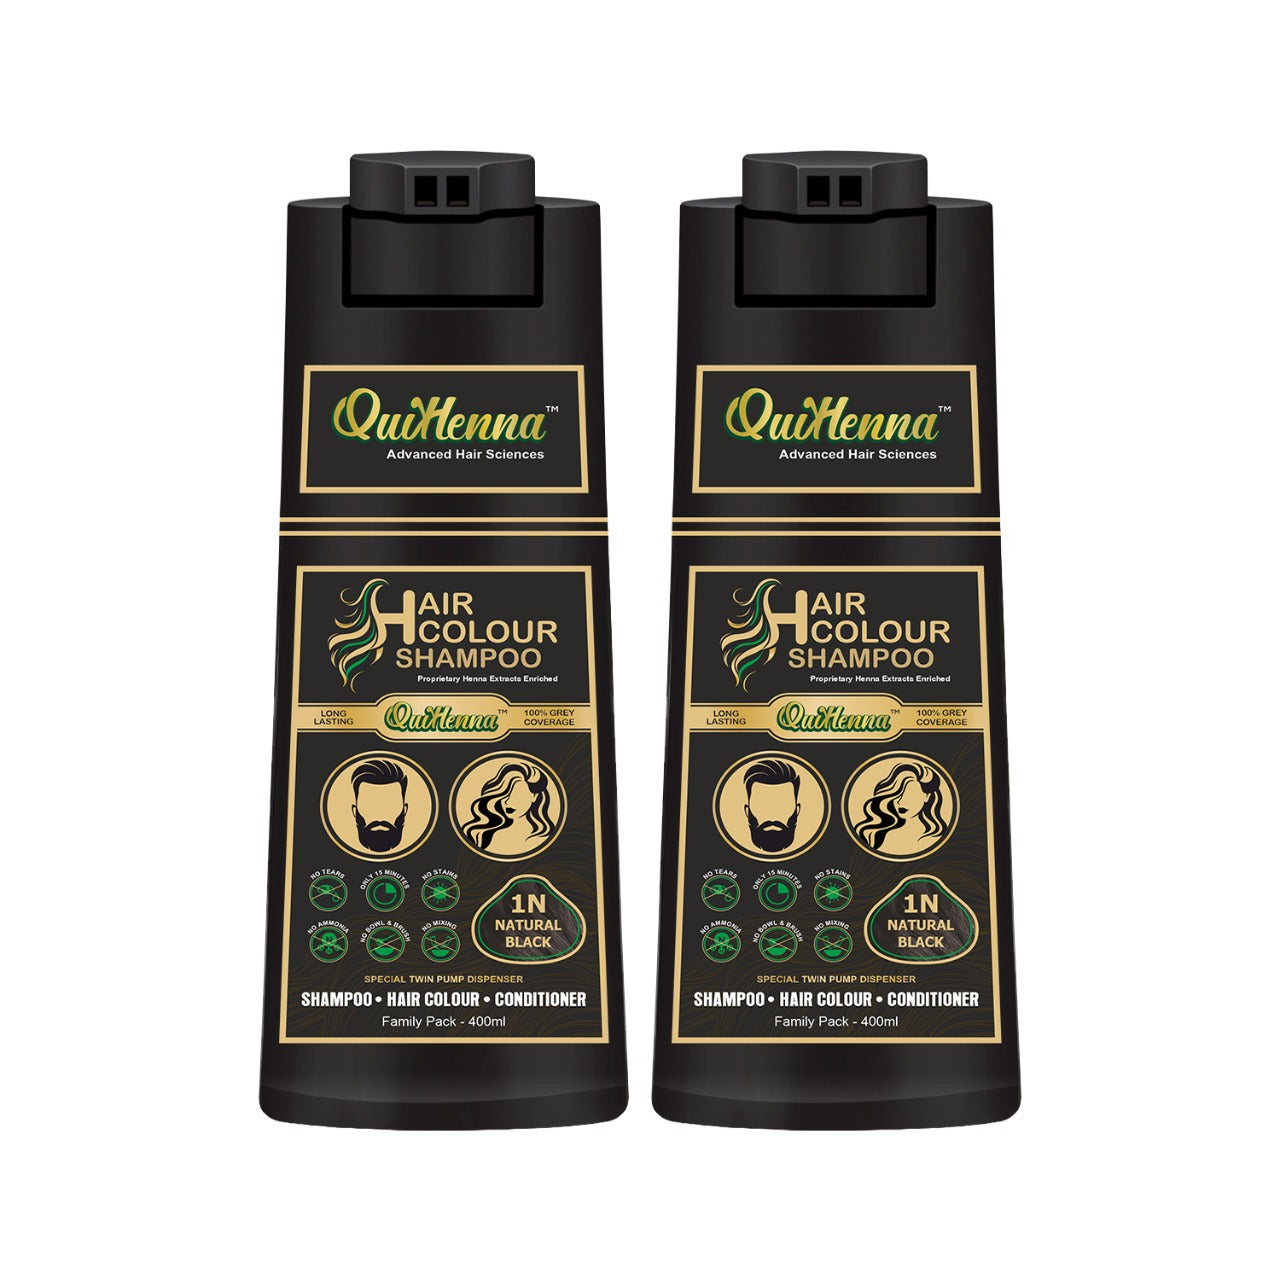 QuikHenna Ammonia Free Hair Colour Shampoo For Men and Women-8